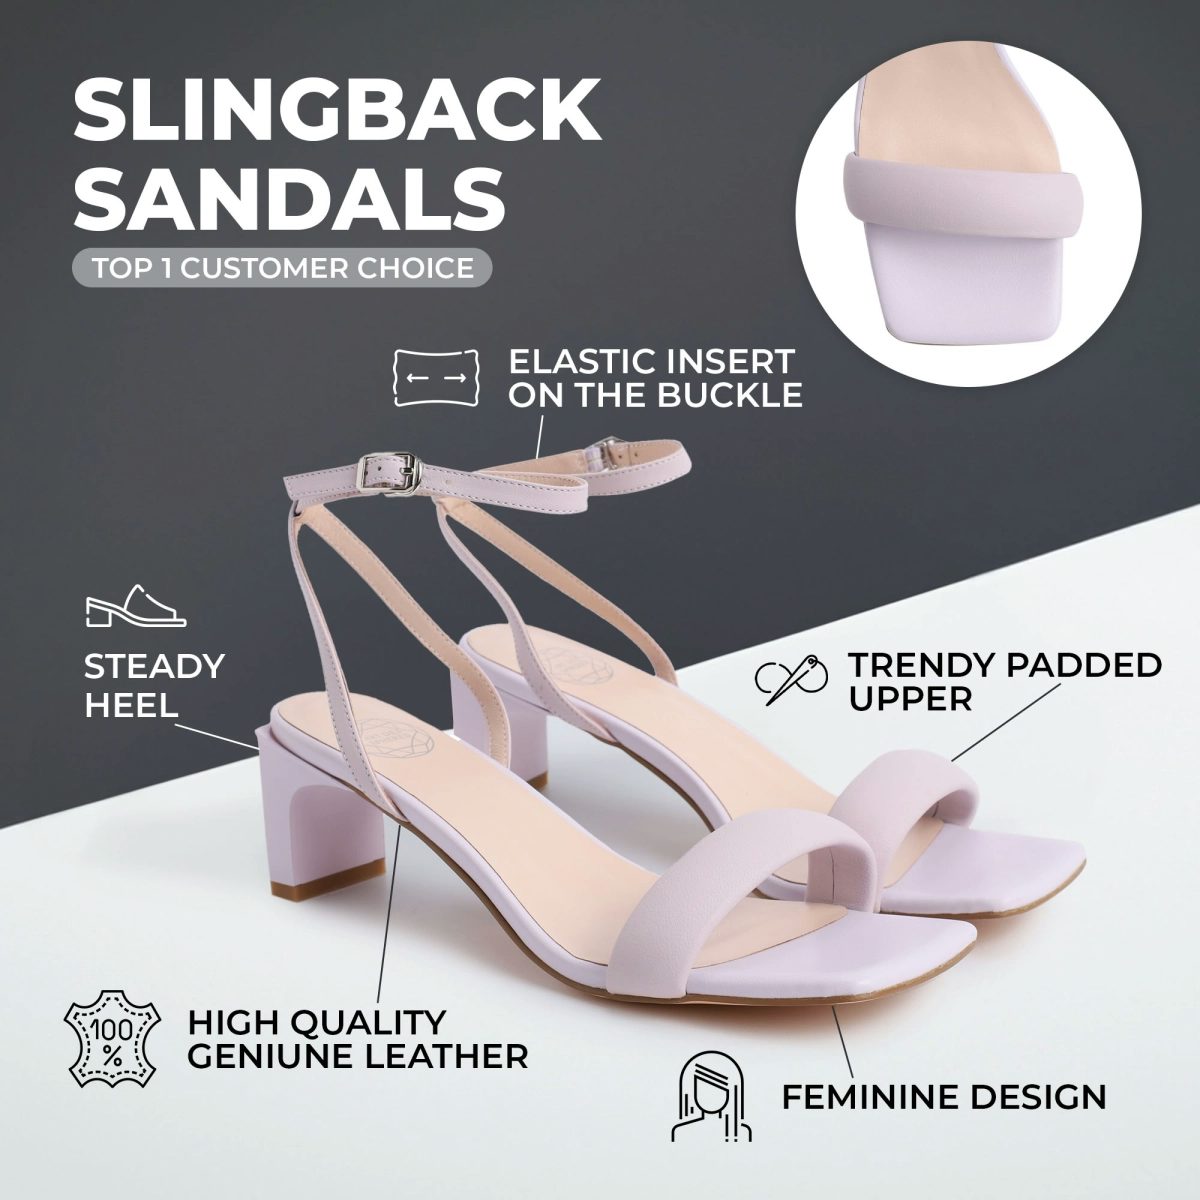 Slingback sandals